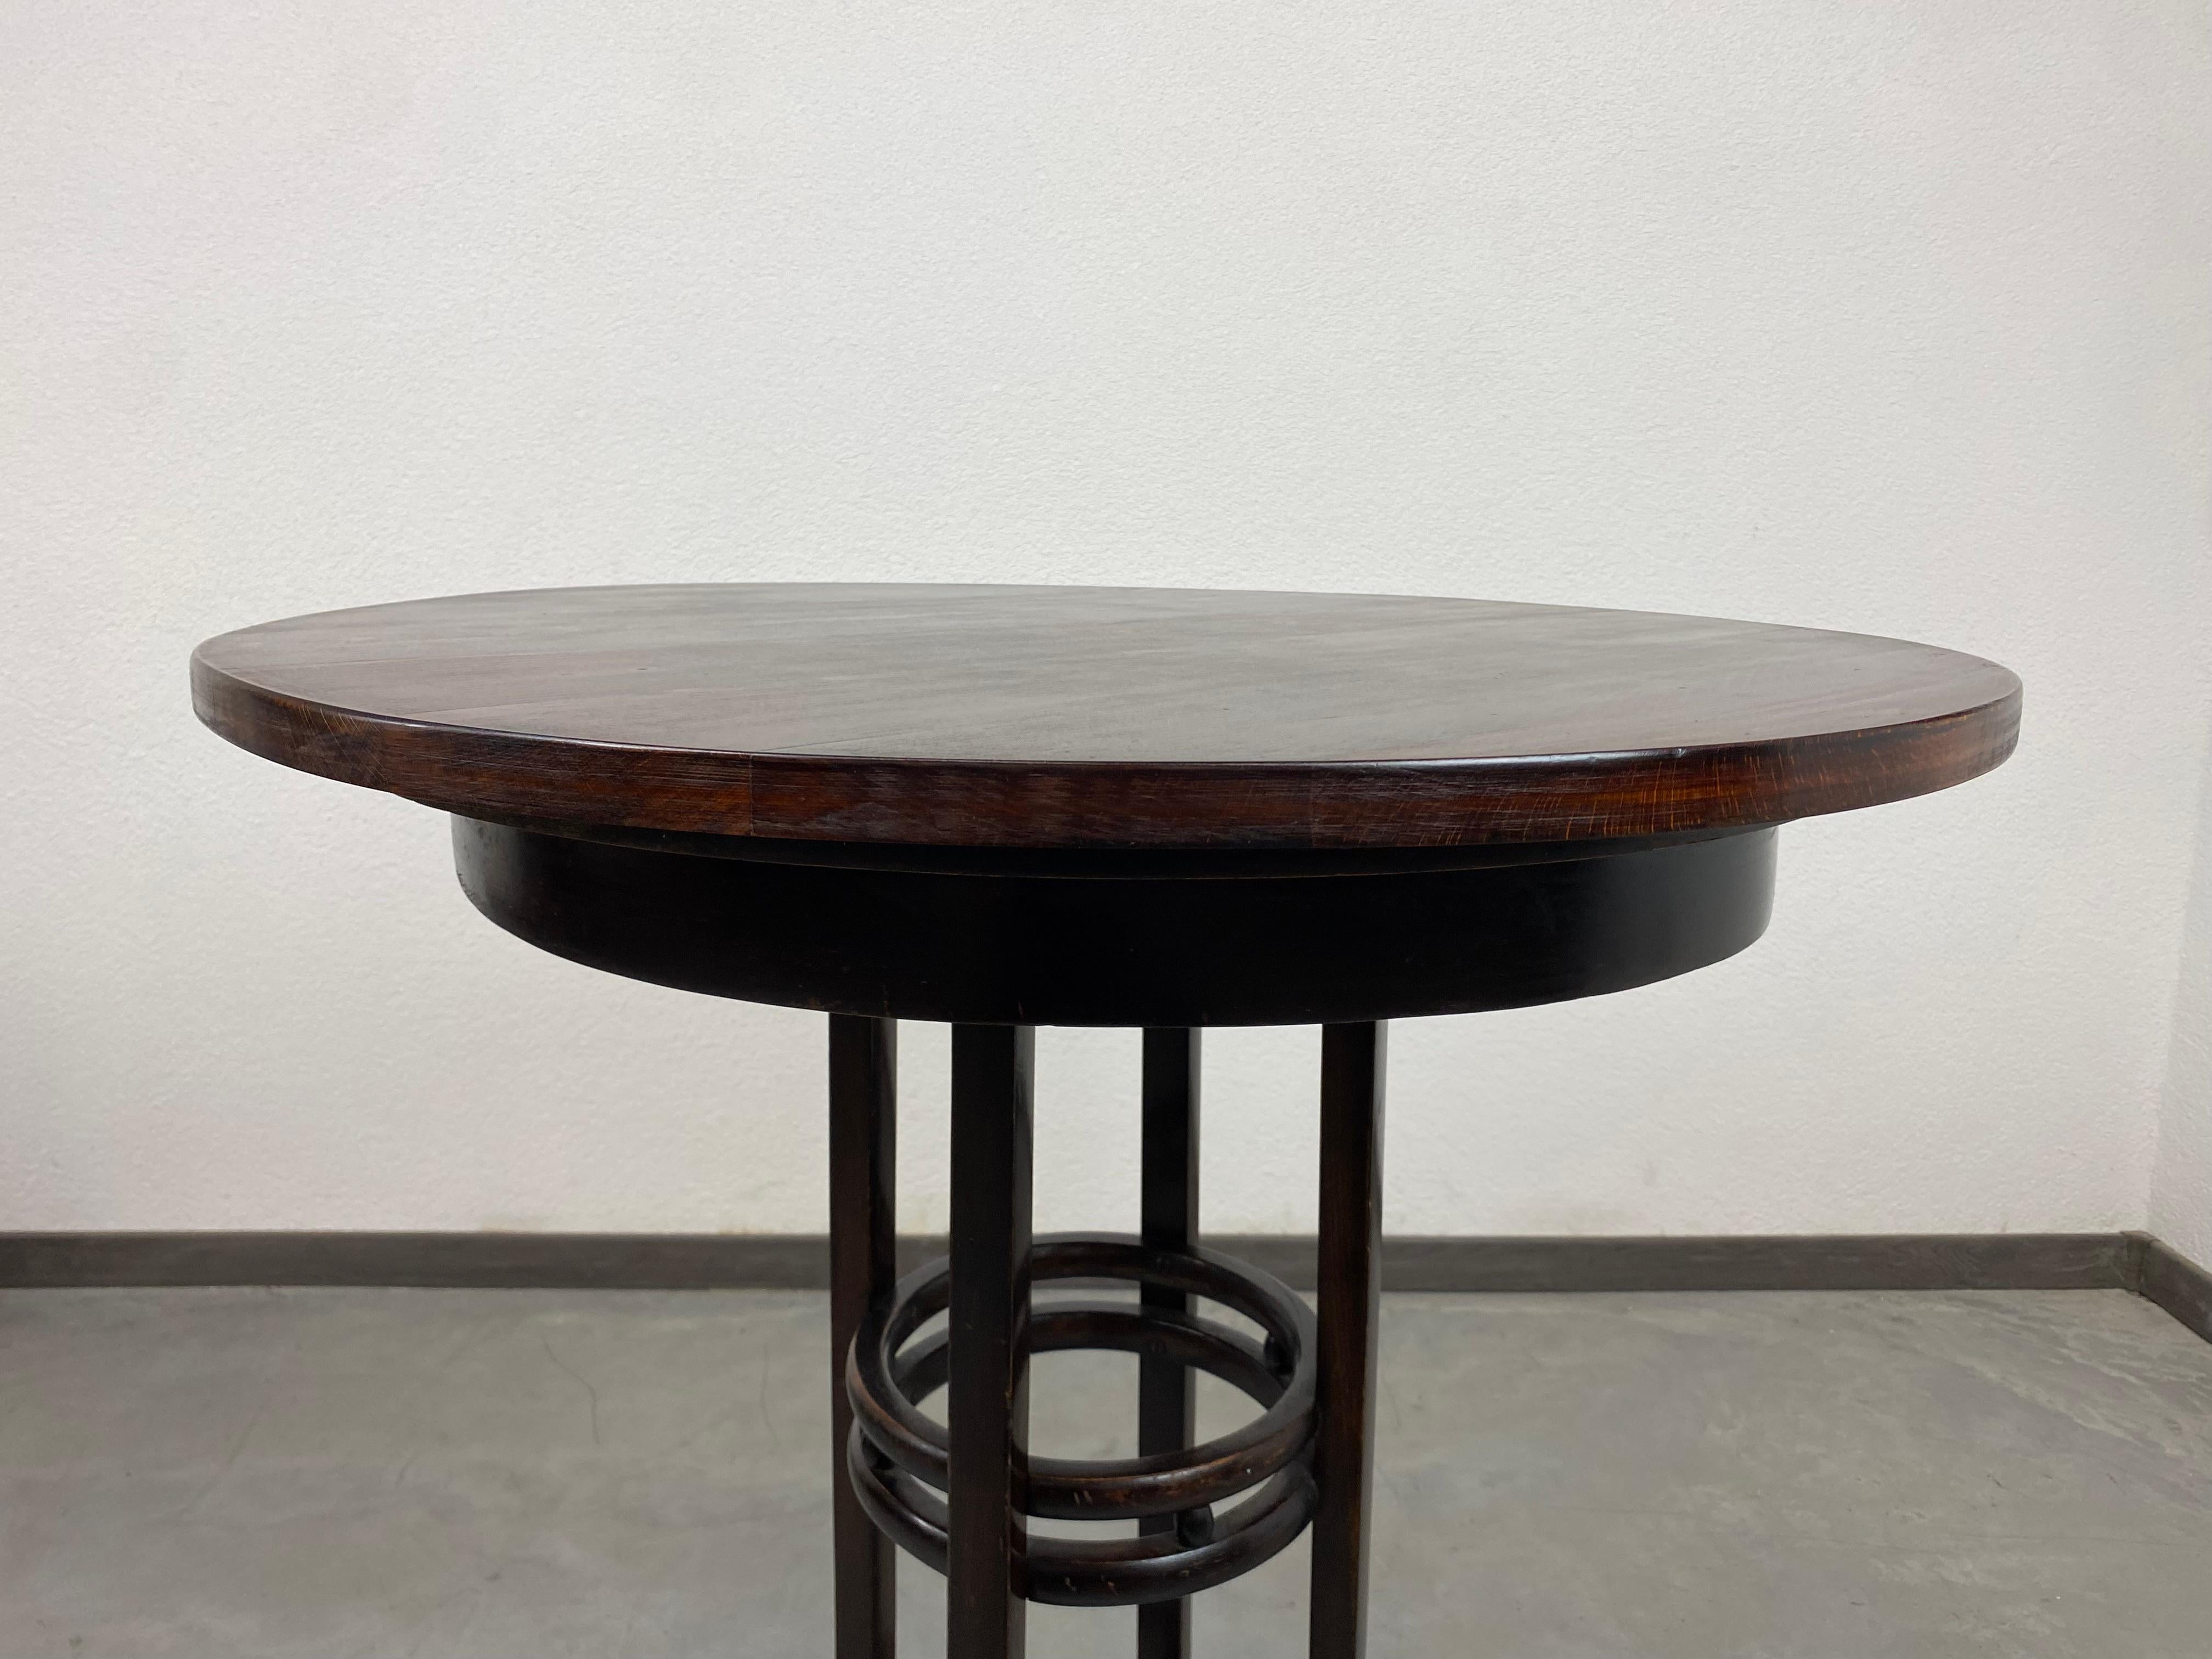 Thonet Table by Josef Hoffmann In Good Condition For Sale In Banská Štiavnica, SK